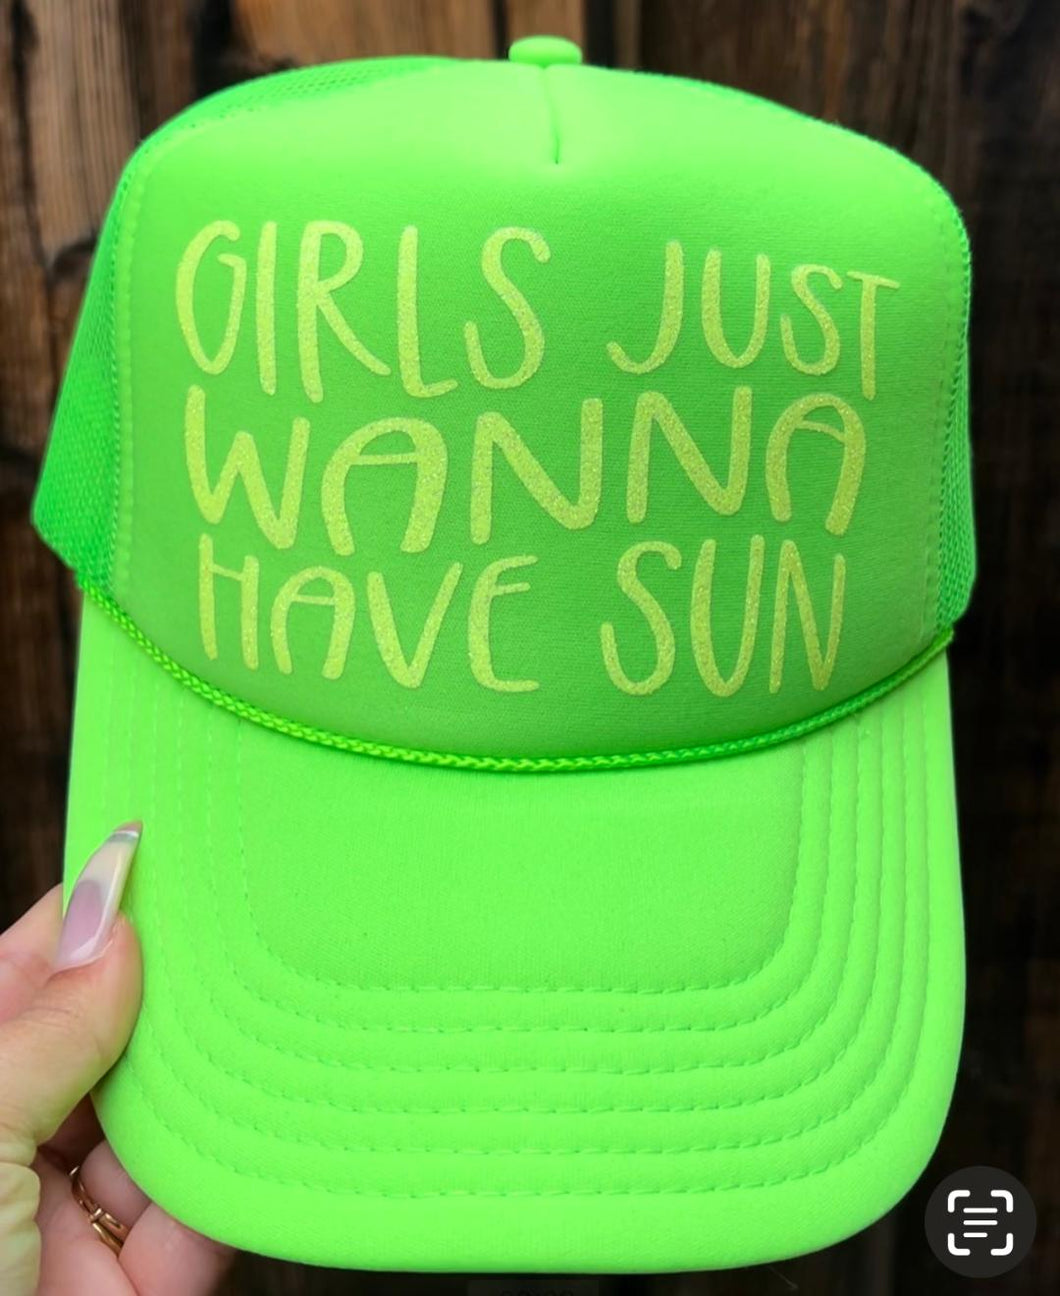 Girls Just Wanna Have Sun Lime Green Trucker Hat